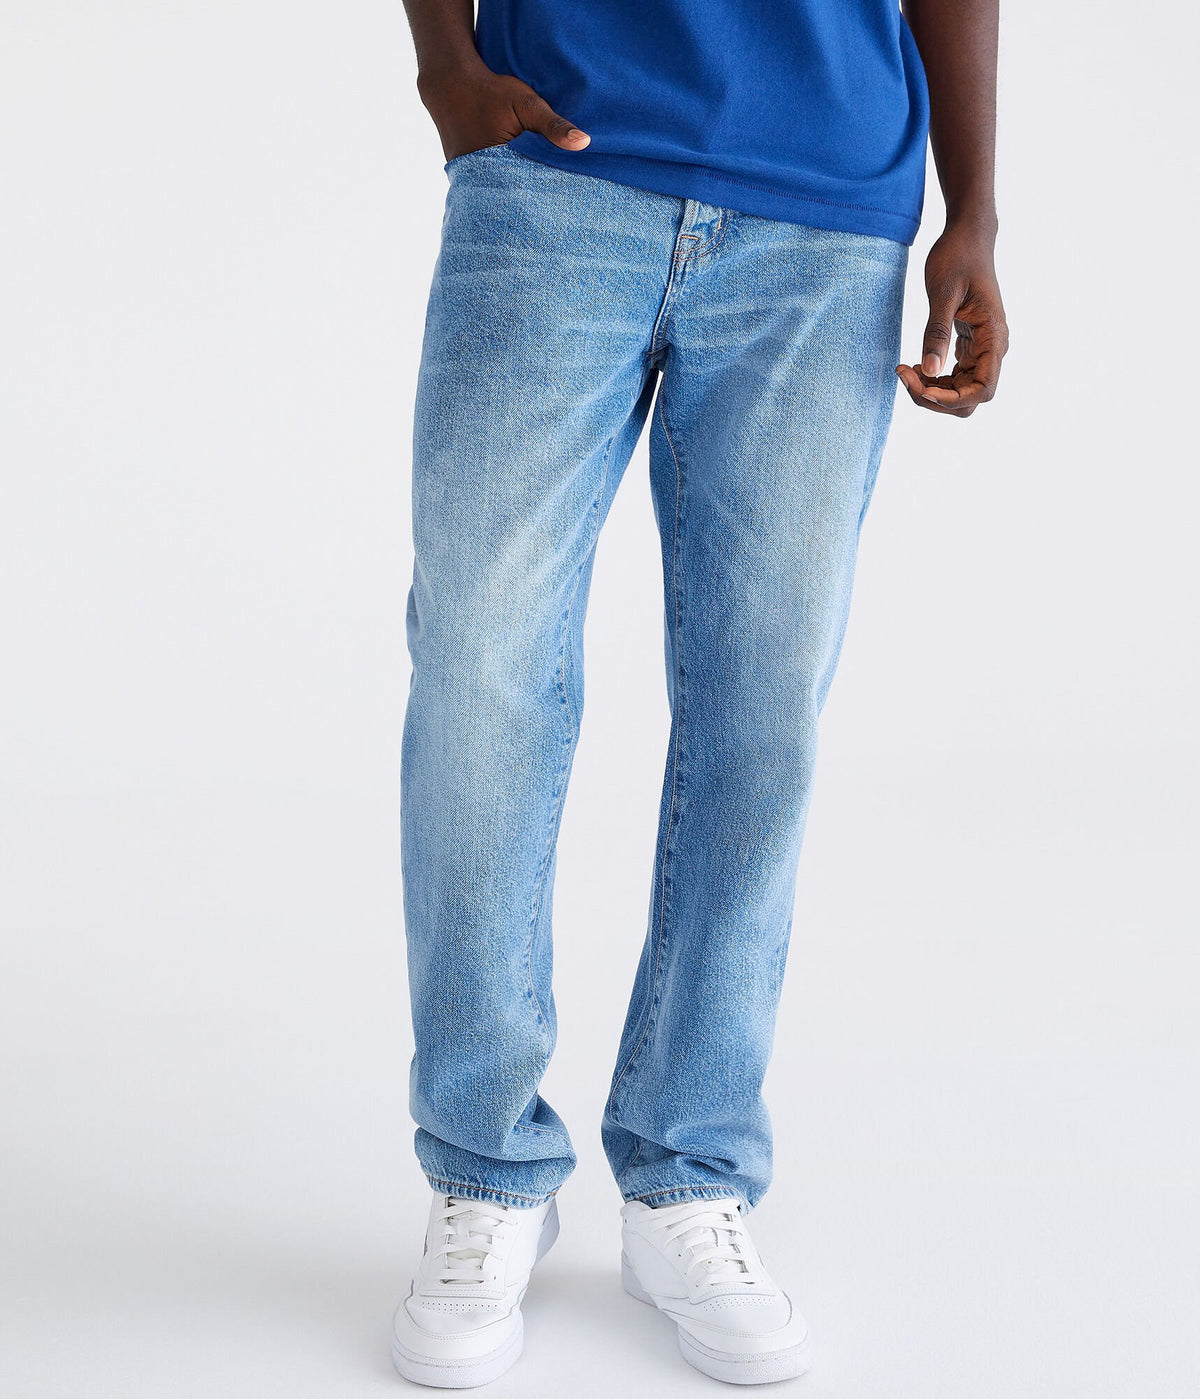 Aeropostale Mens' Straight Next Gen Jean - Blue - Size 32X32 - Cotton - Teen Fashion & Clothing Light Wash